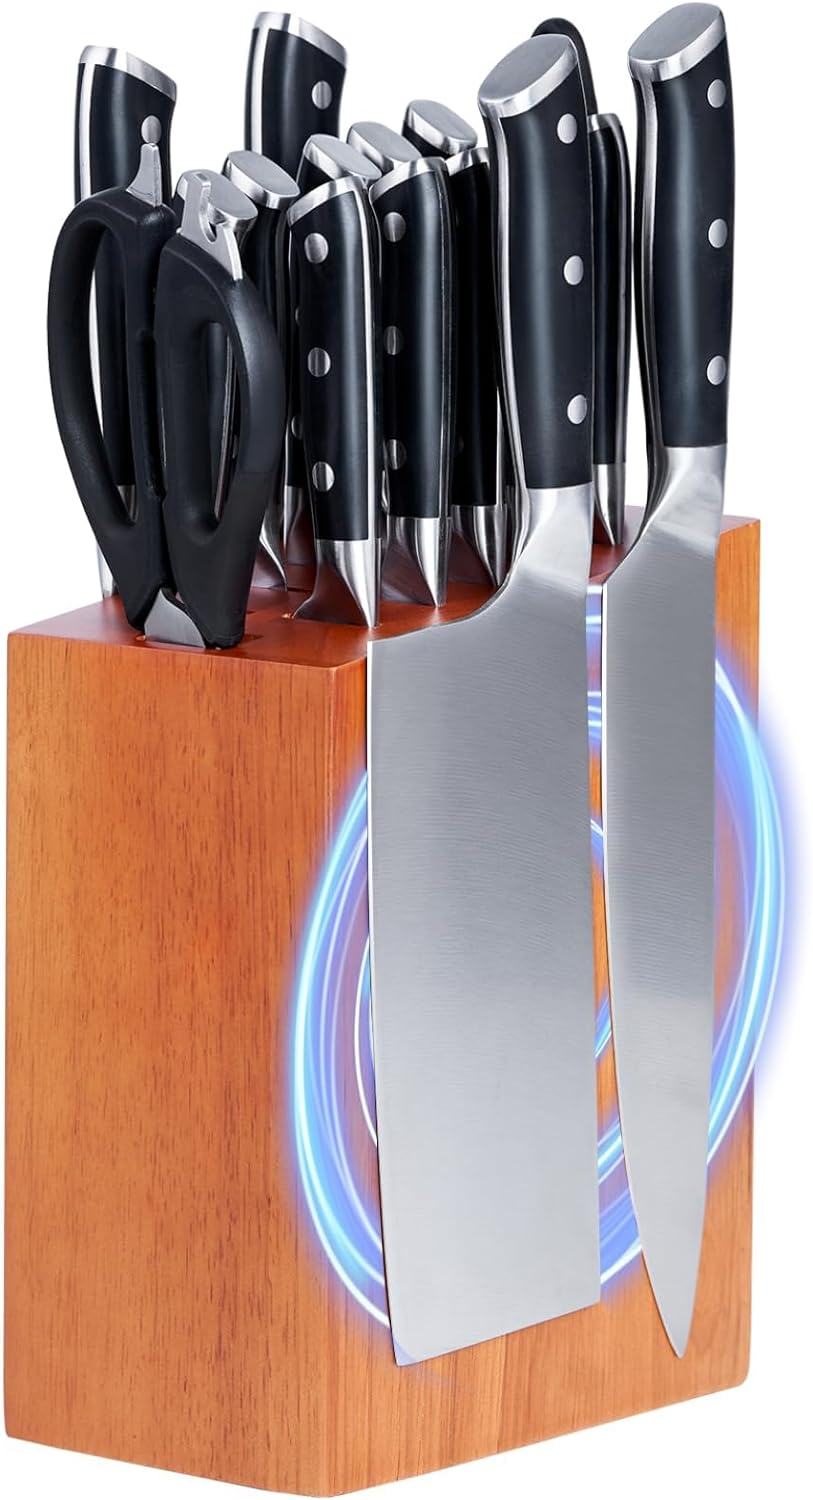 Topfeel 17PCS Kitchen Knife Set with Magnetic Knife Block-5 Chef Knives,8 Serrated Steak Knives Ultra Sharp Chef Knife Set with Knife Sharpener,Kitchen Scissors